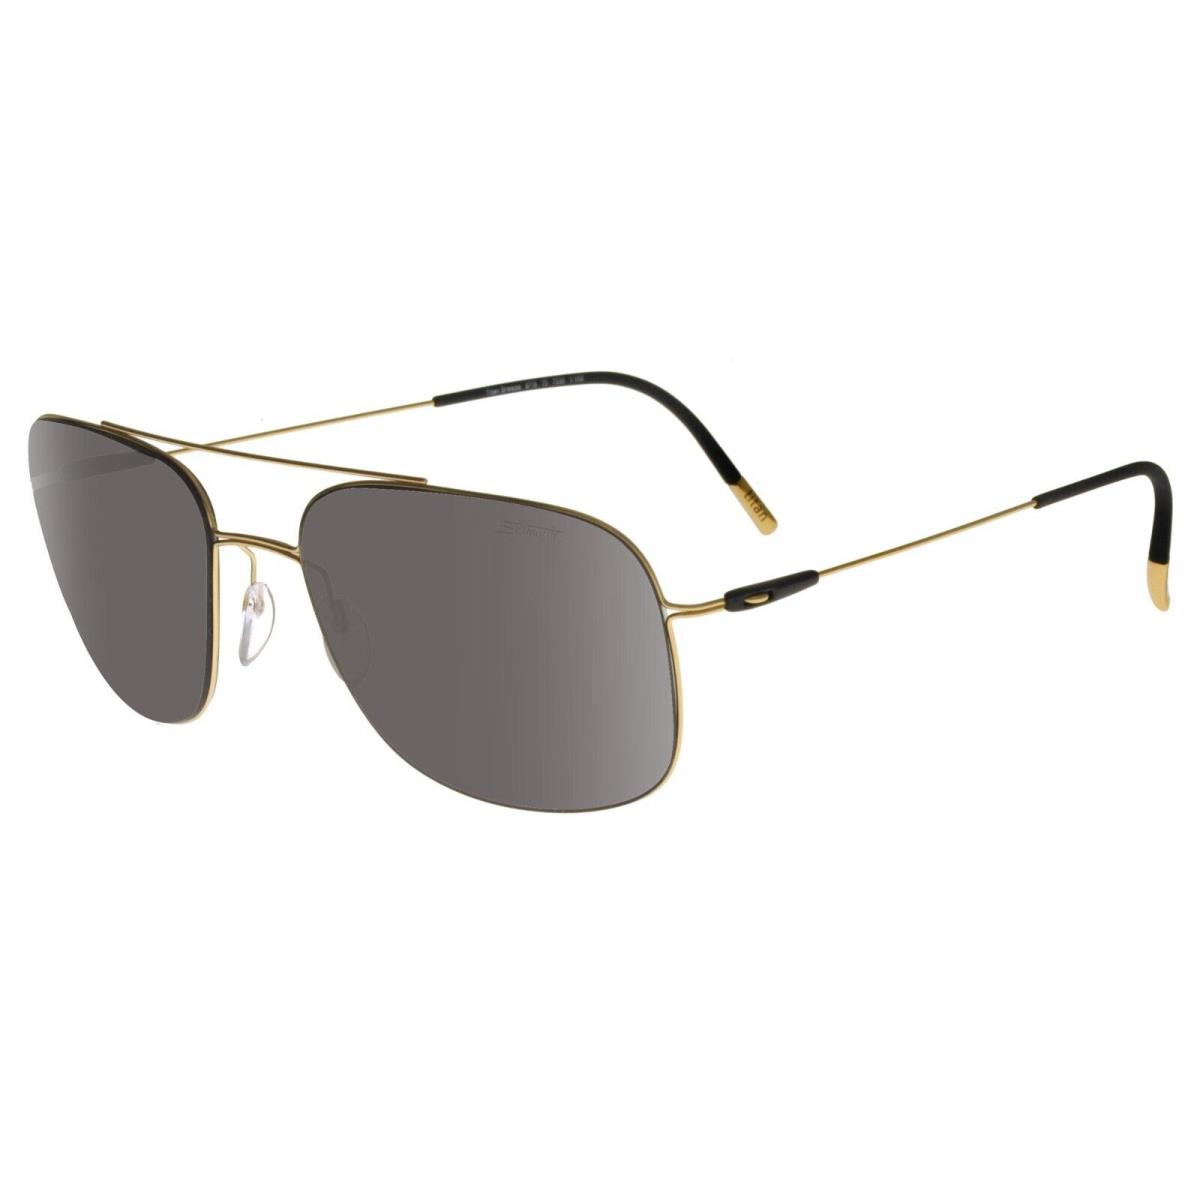 Silhouette Titan Breeze 8716 Gold/grey Polarized 7530 Sunglasses